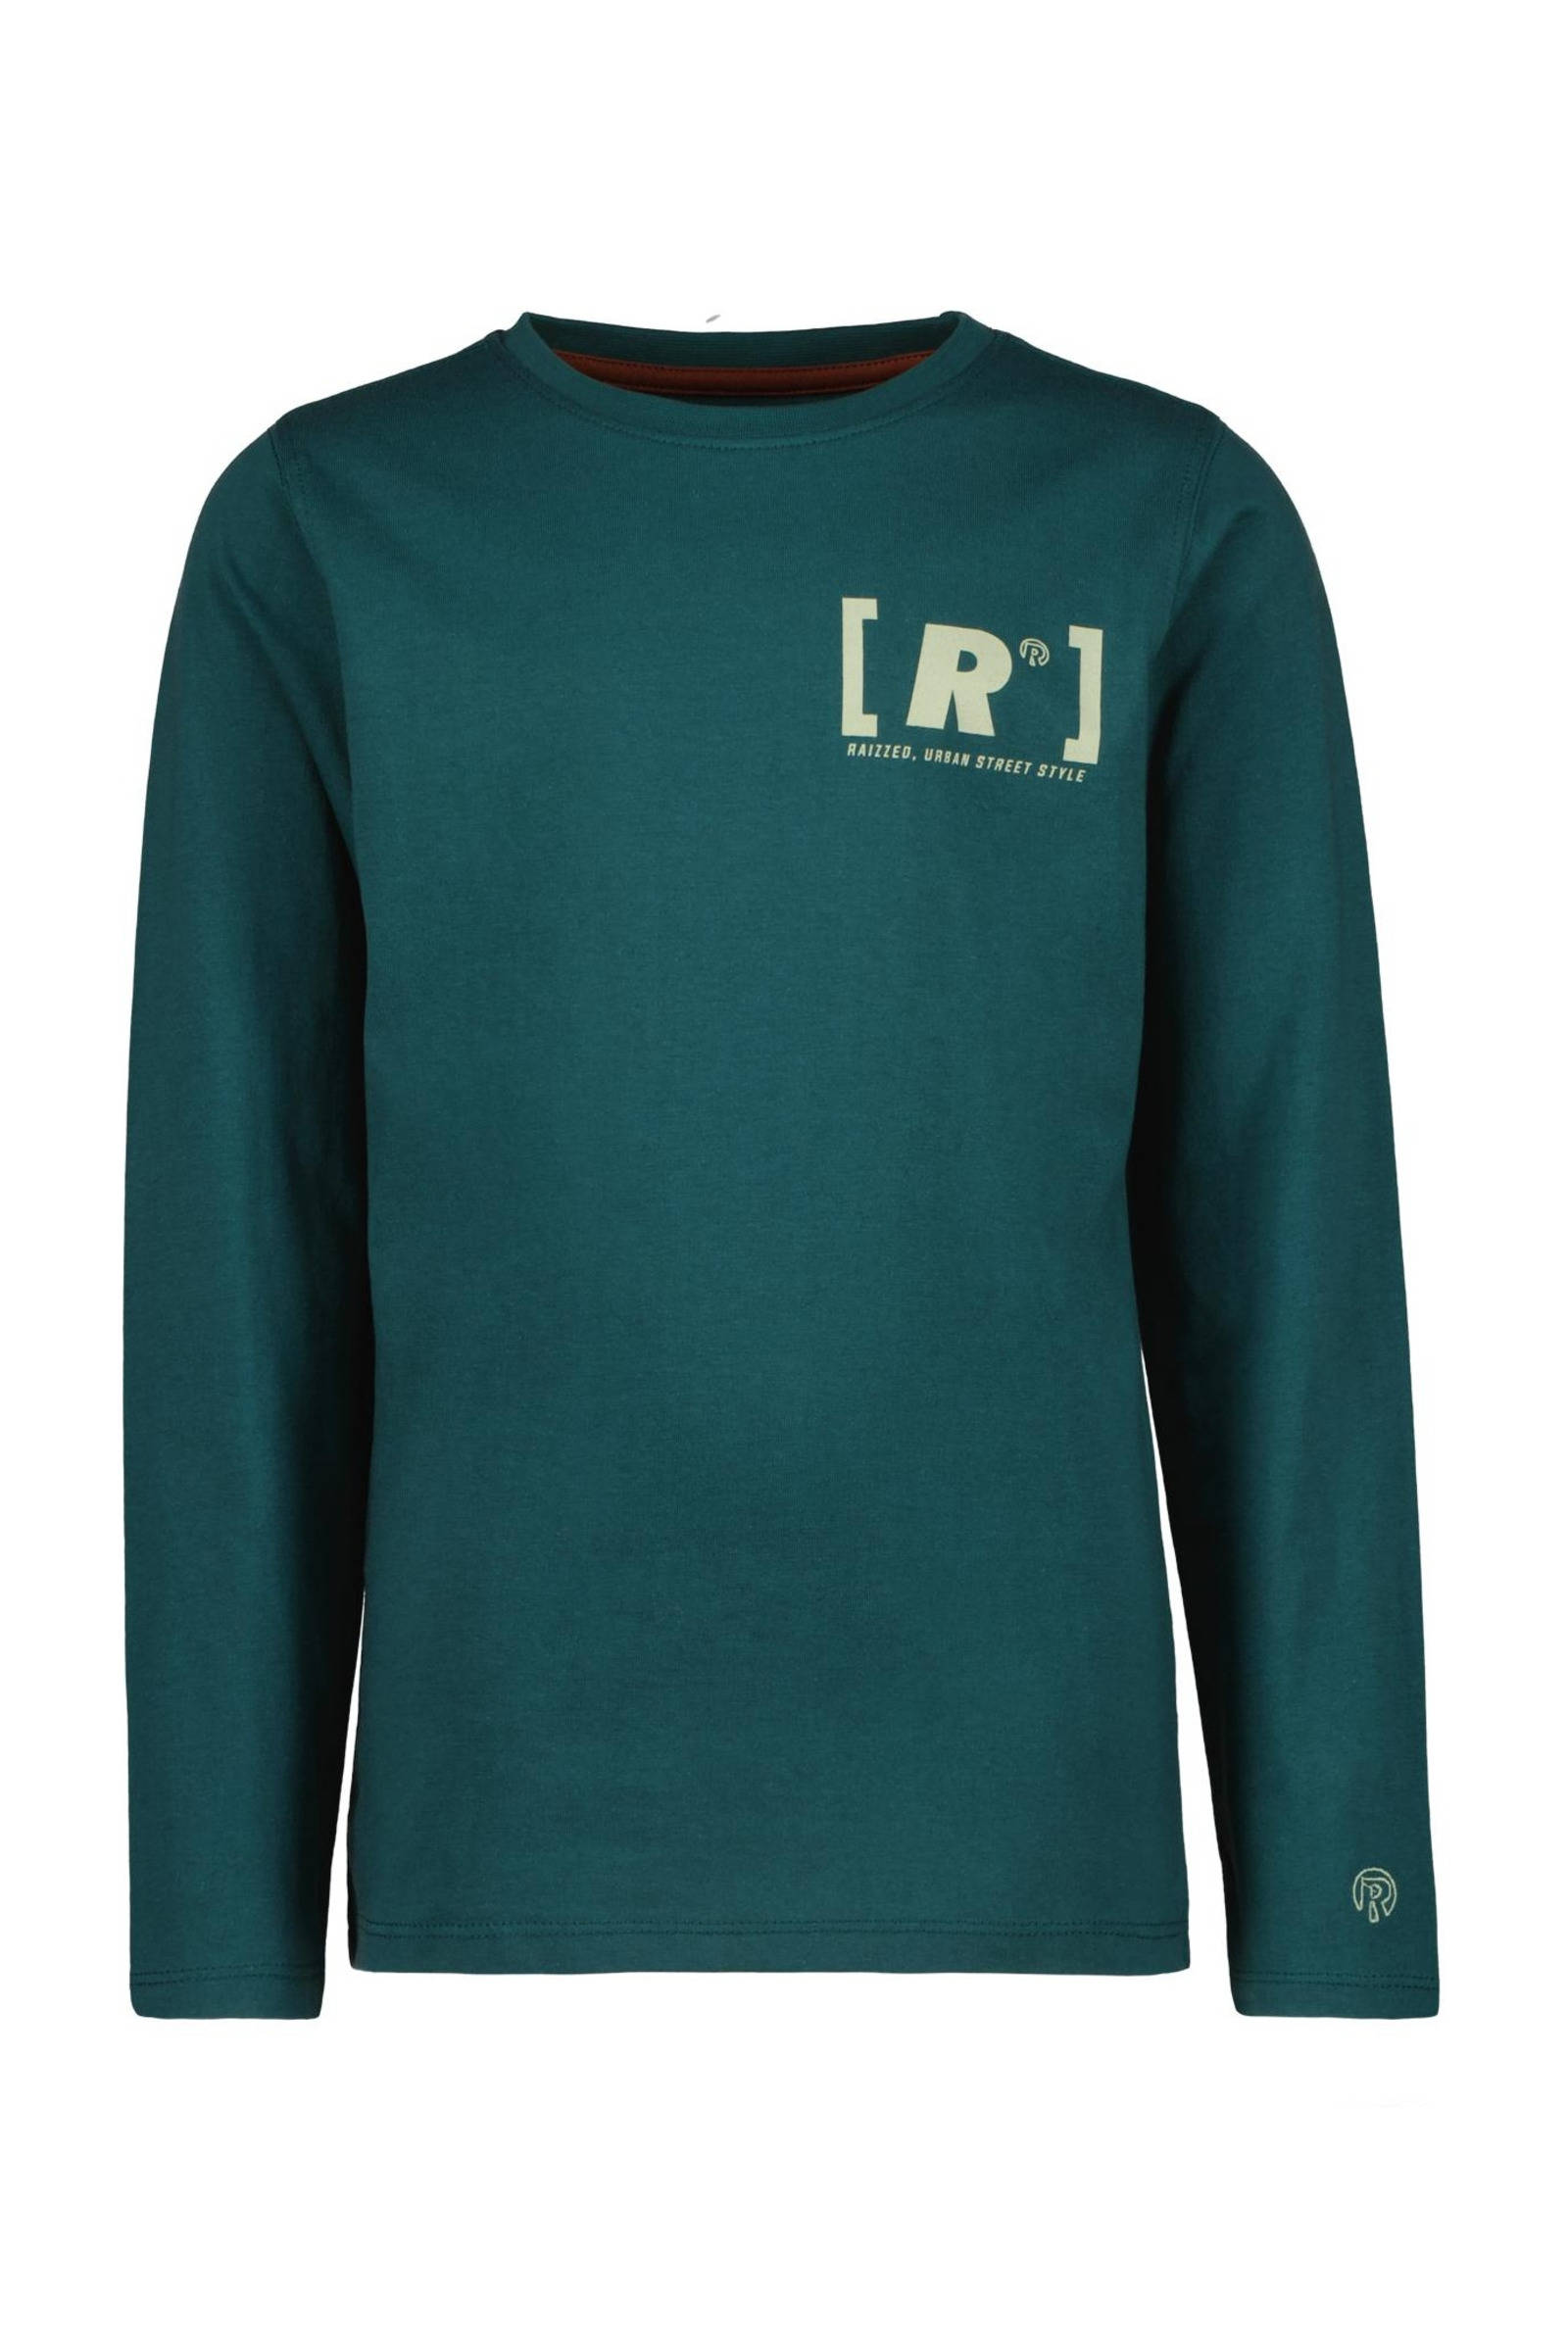 Longsleeve Jayro met camouflageprint groen/kaki wehkamp Jongens Kleding Tops & Shirts Shirts Lange Mouwen Shirts 